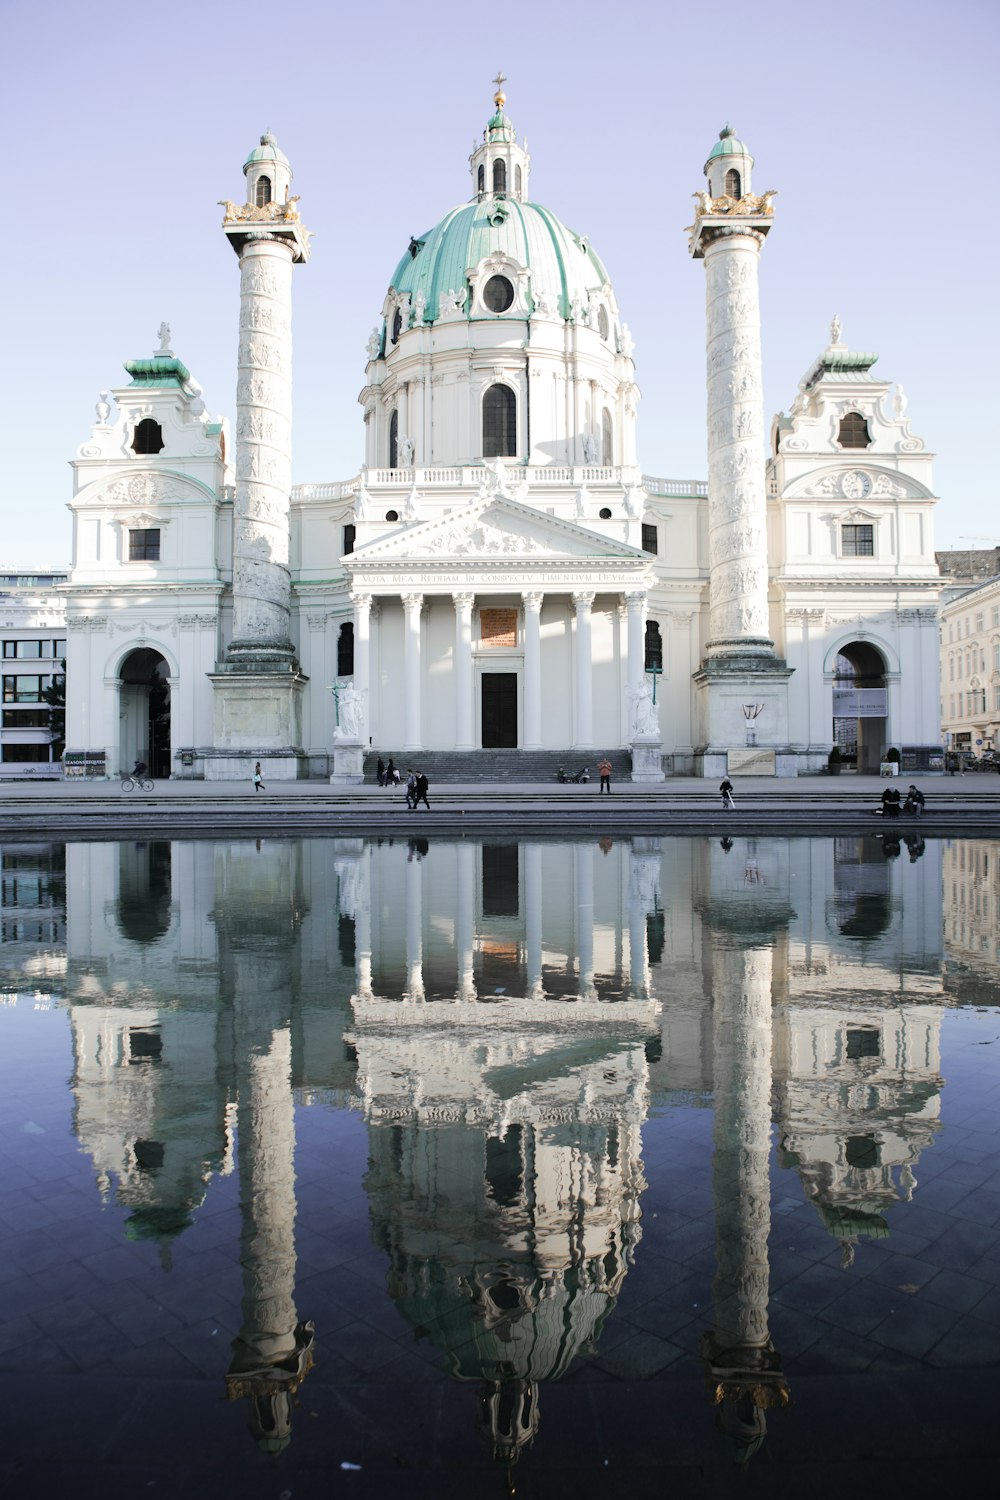 St. Charles's Church, Vienna